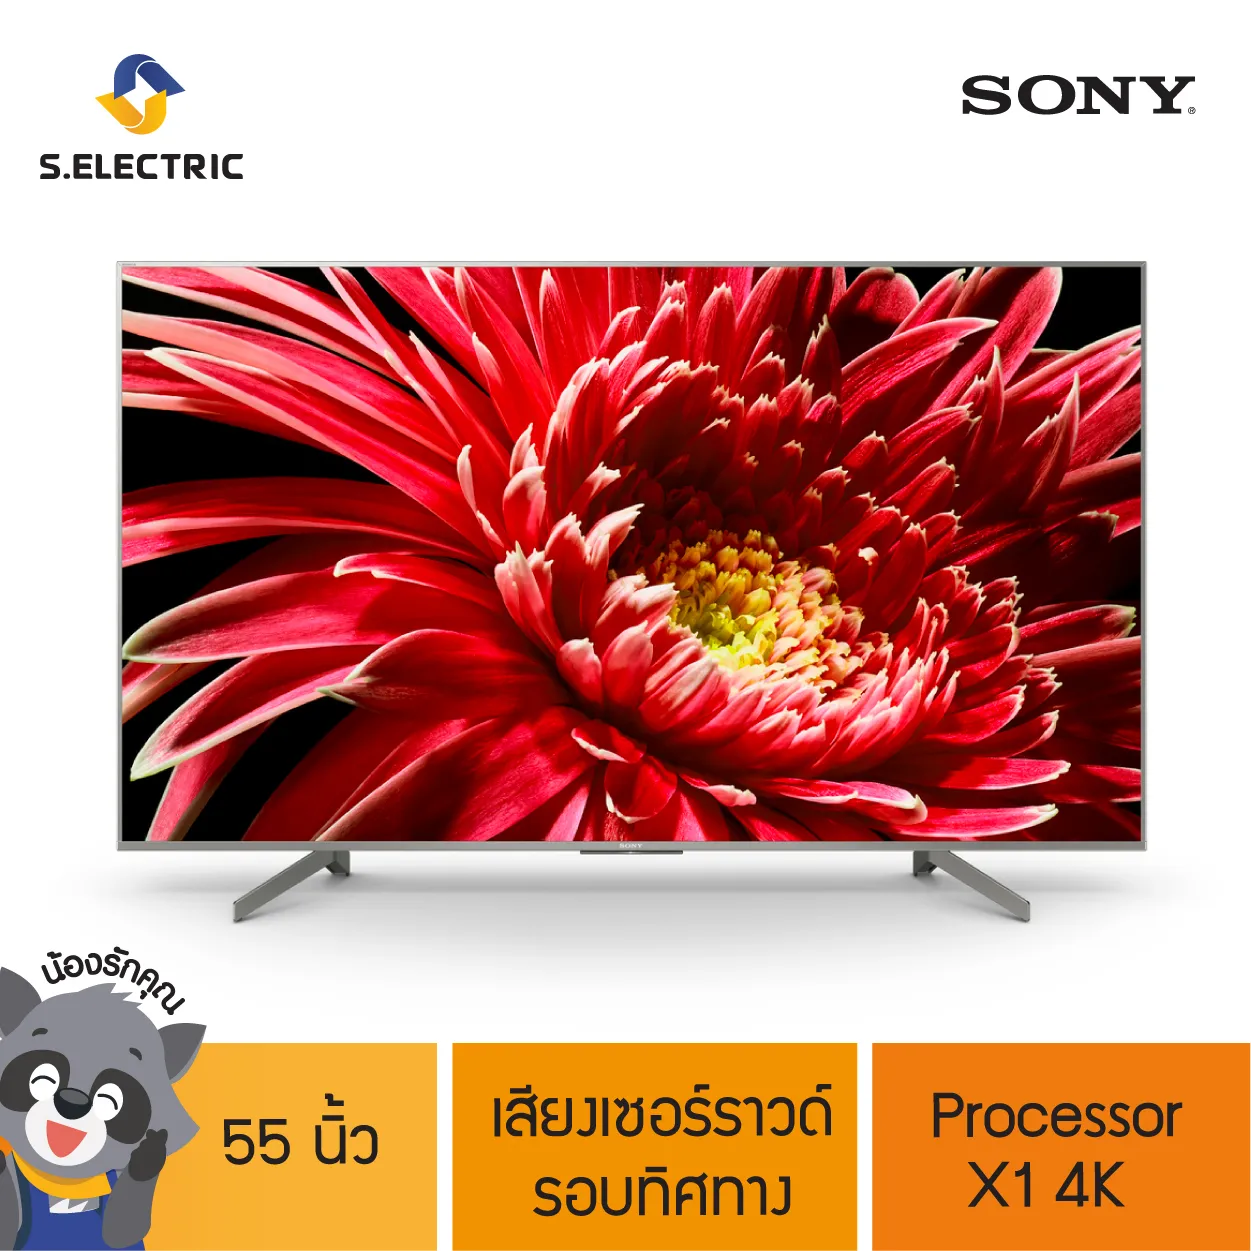 SONY TV 55นิ้ว 4K สมาร์ททีวี Android TV รุ่น KD-55X8500G/S (สีเงิน)  Processor X1 4K X-Reality PRO Dolby Atmos ให้เสียงเซอร์ราวด์รอบทิศทาง